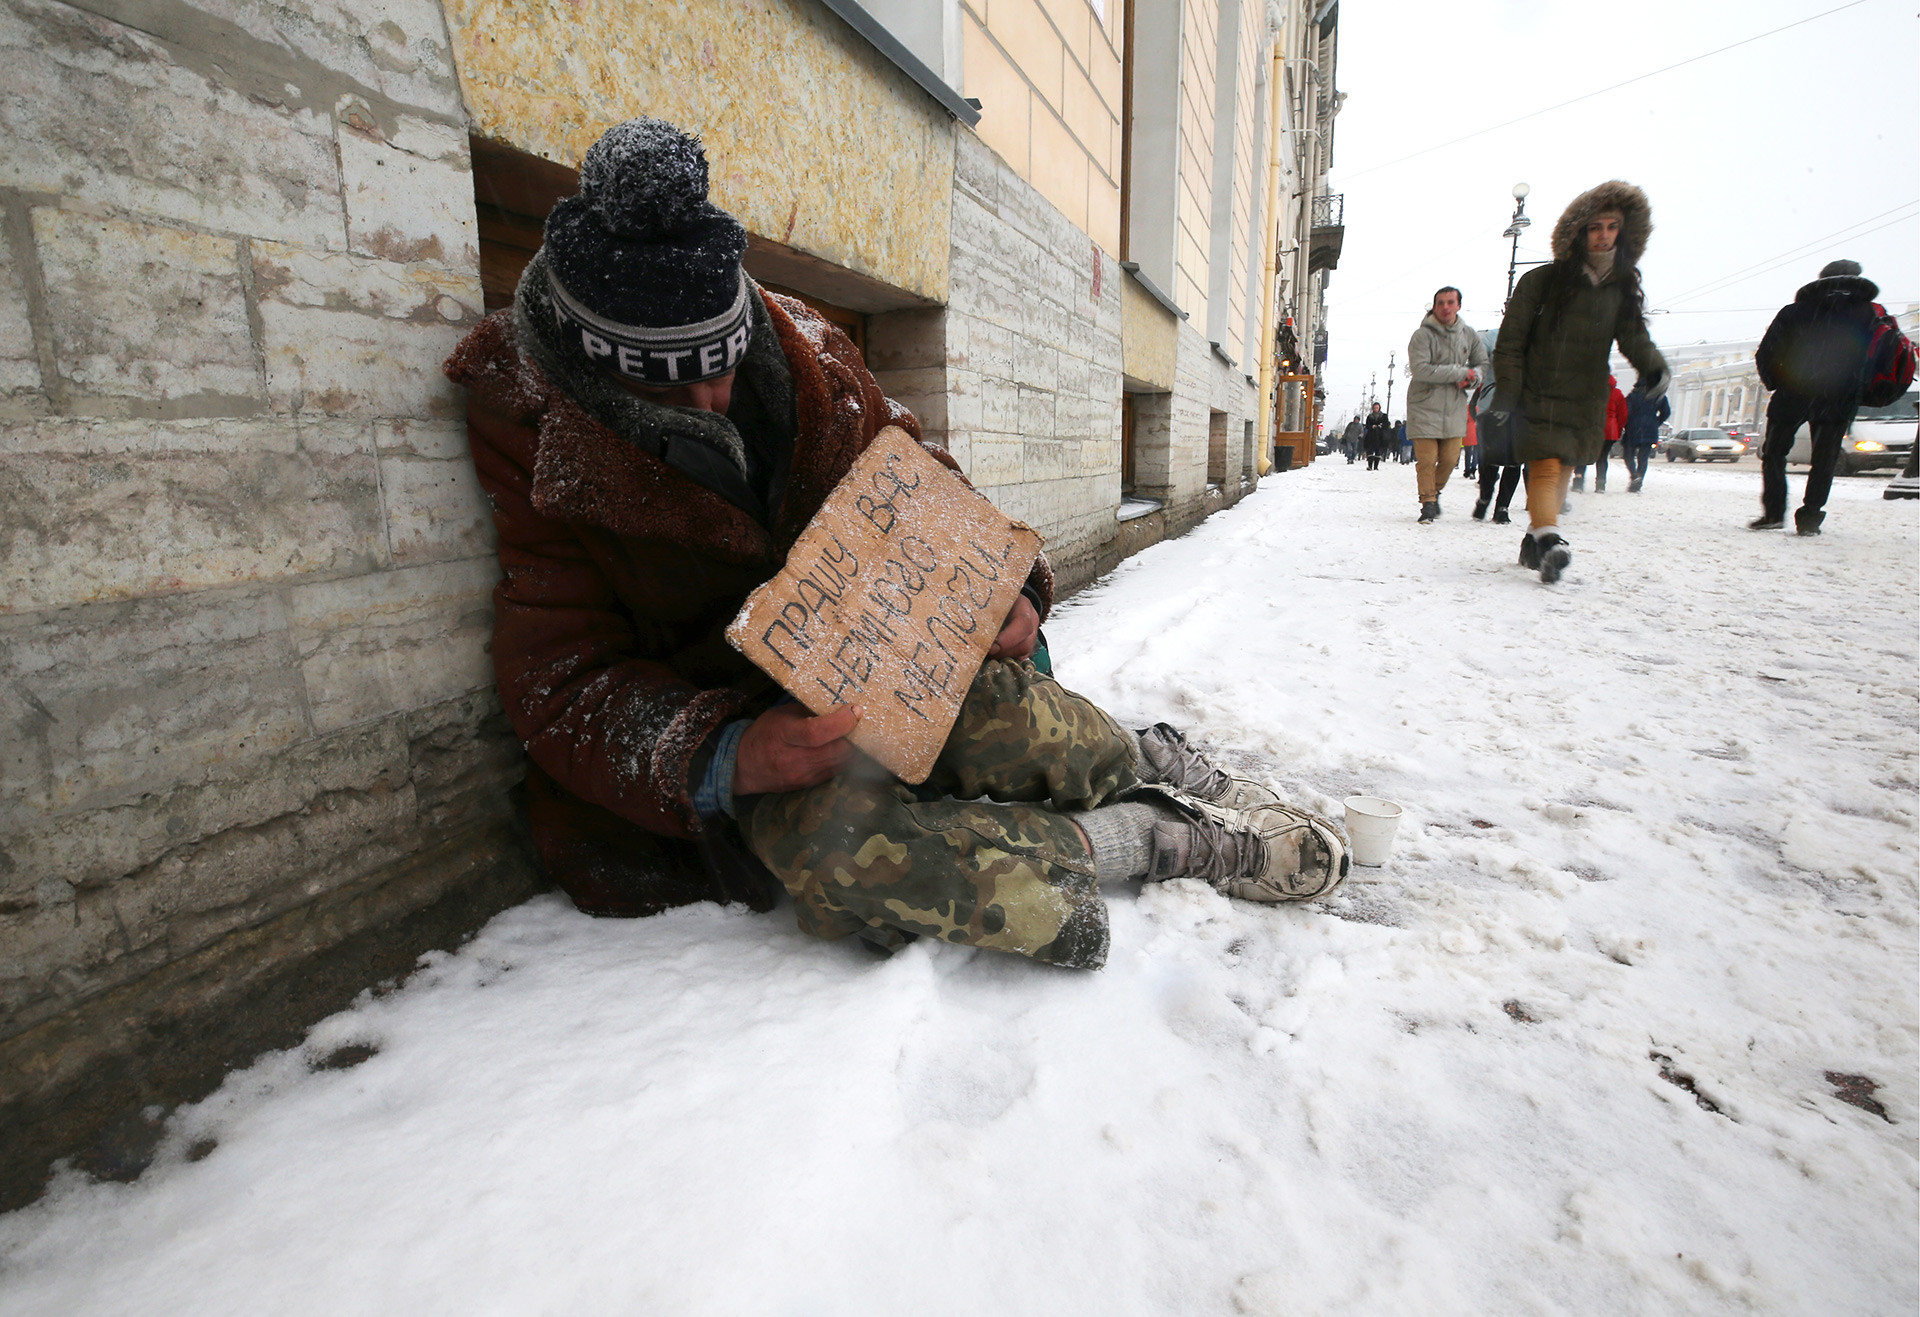 Homeless man sleeping rough, Russia